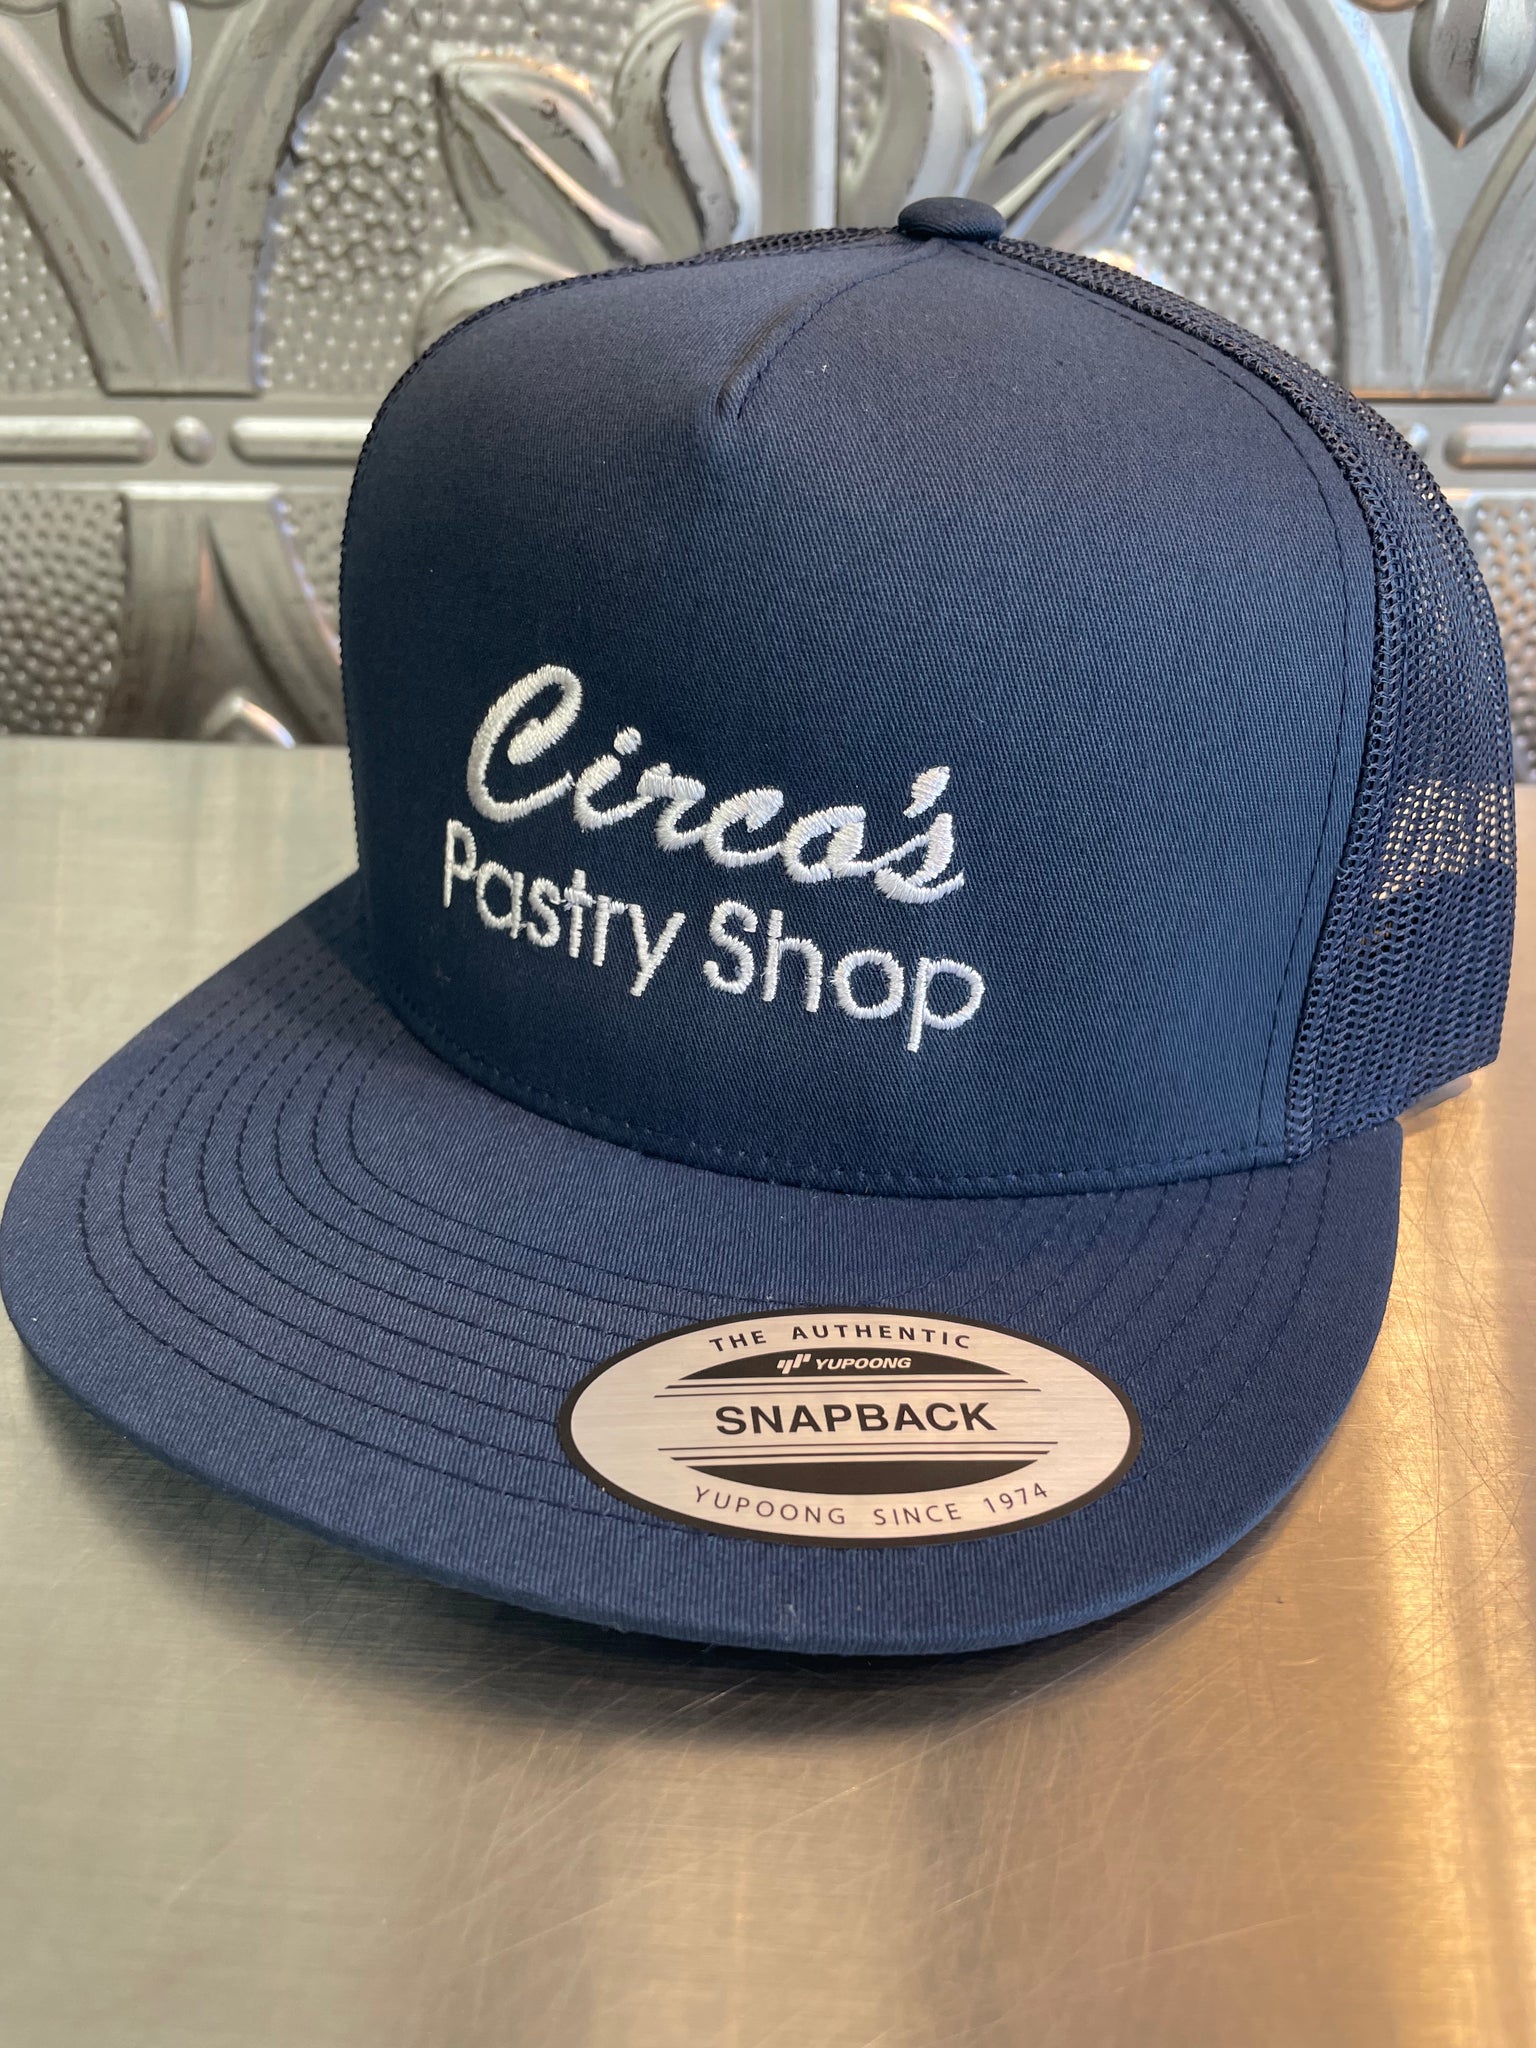 Circo’s Hat